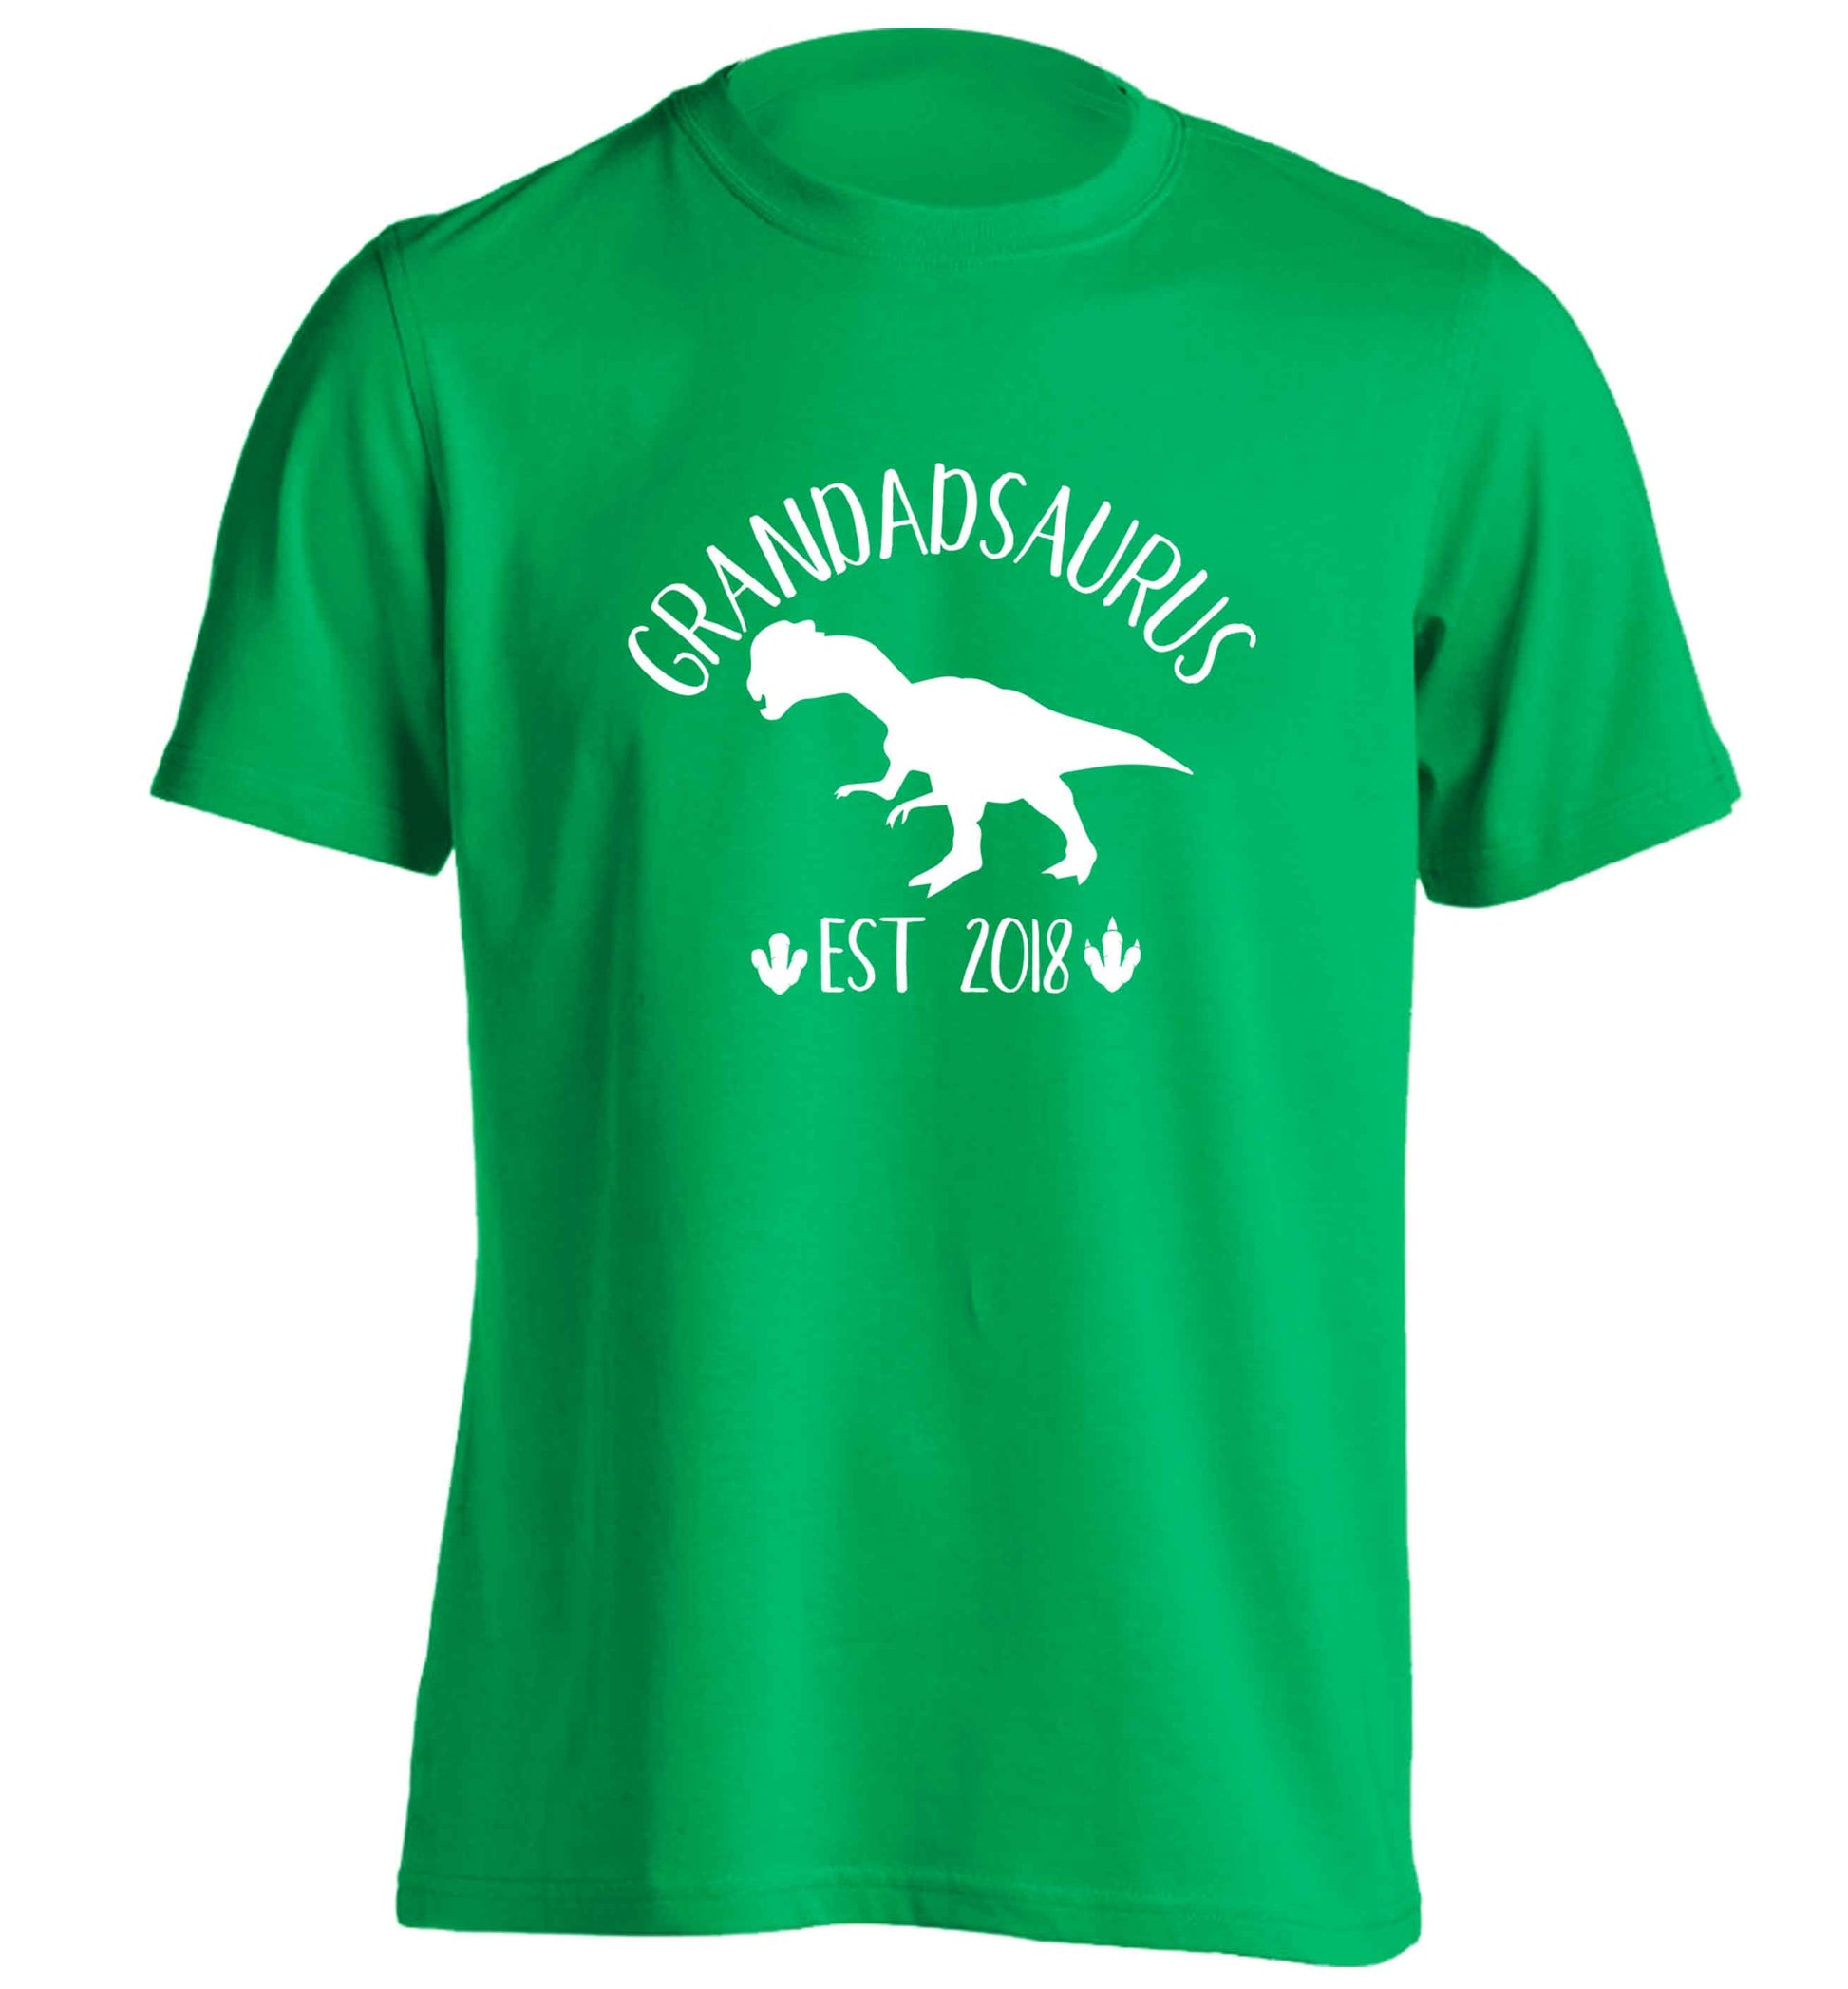 Personalised grandadsaurus since (custom date) adults unisex green Tshirt 2XL